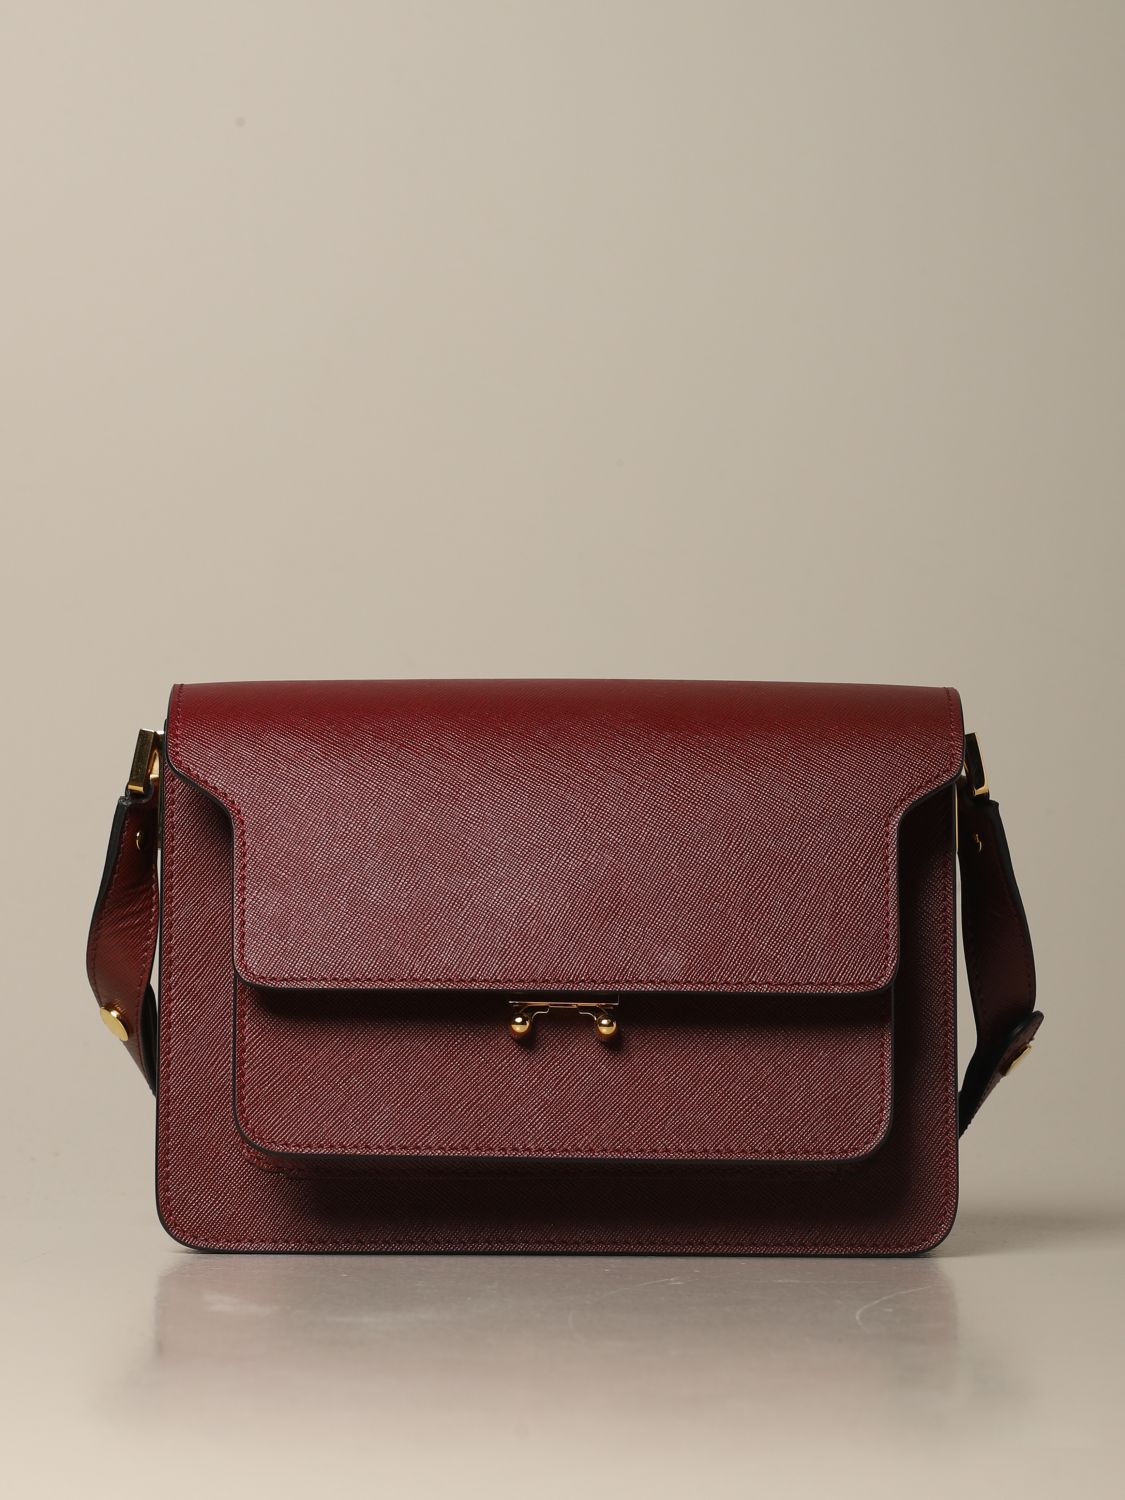 Marni Trunk - Shoulder bag for Woman - Red - SBMPN09NO1LV520ZR82N